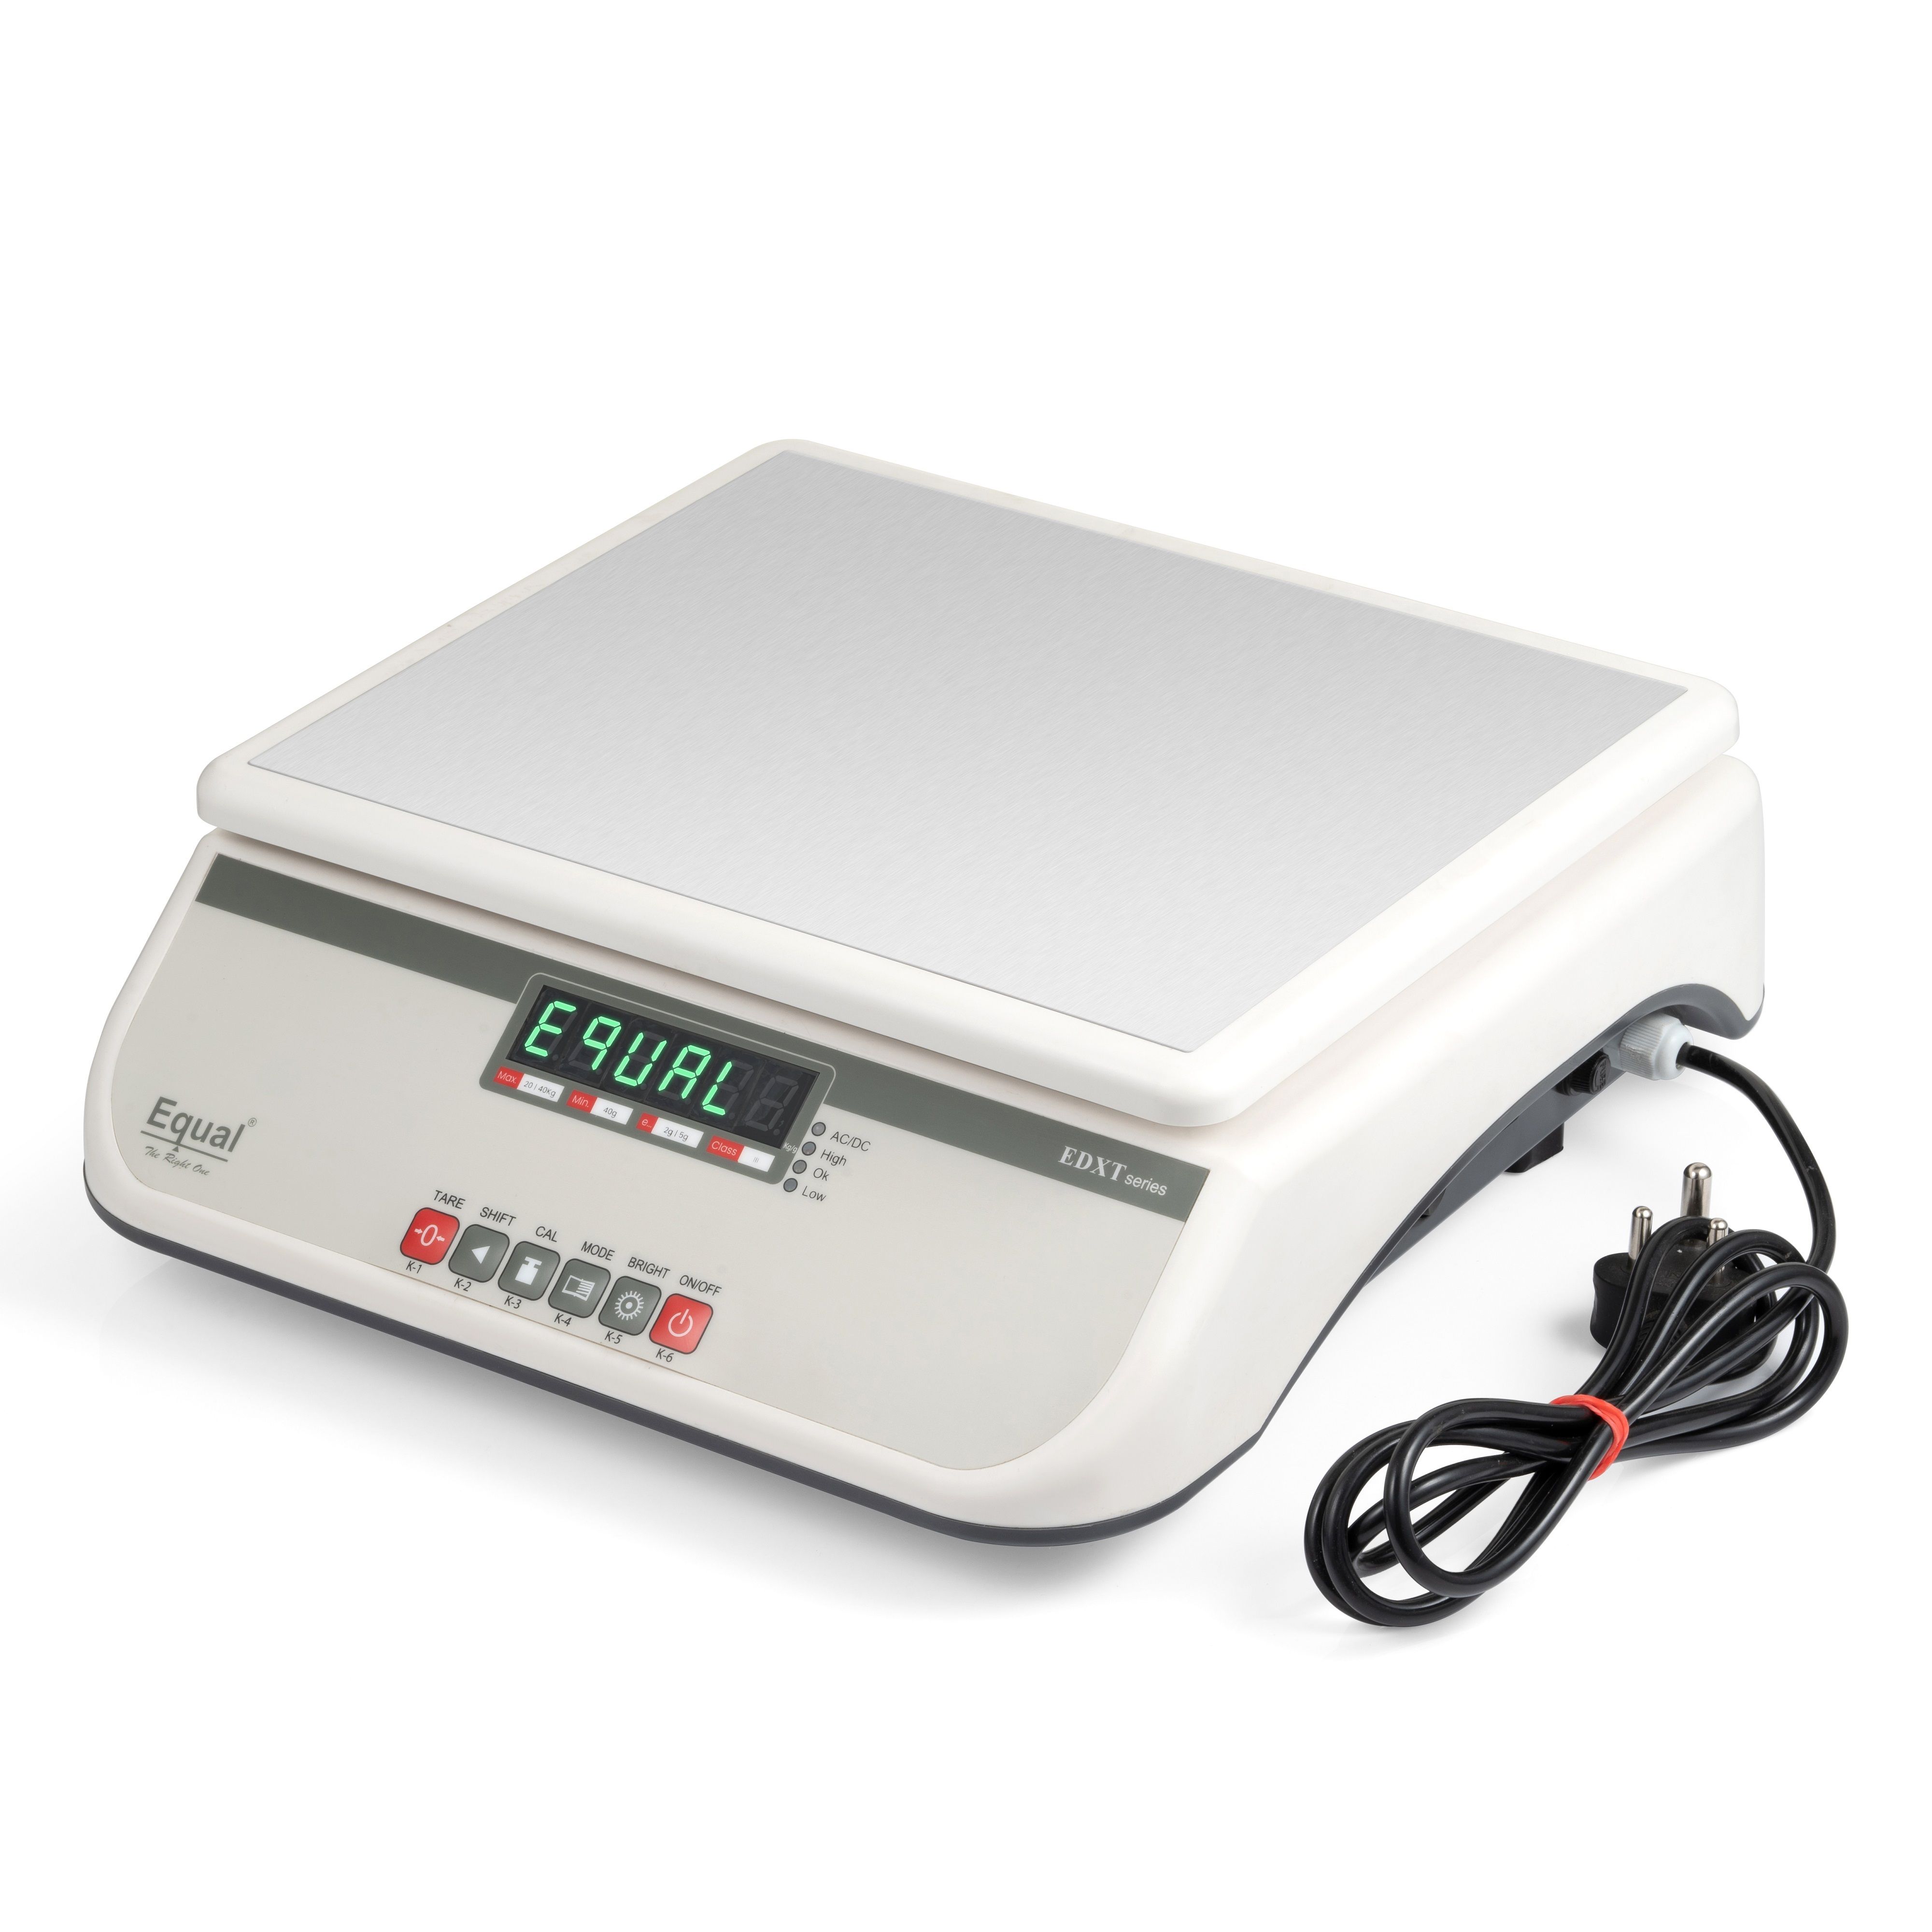 EDXT-05 Electronic Weighing Machine